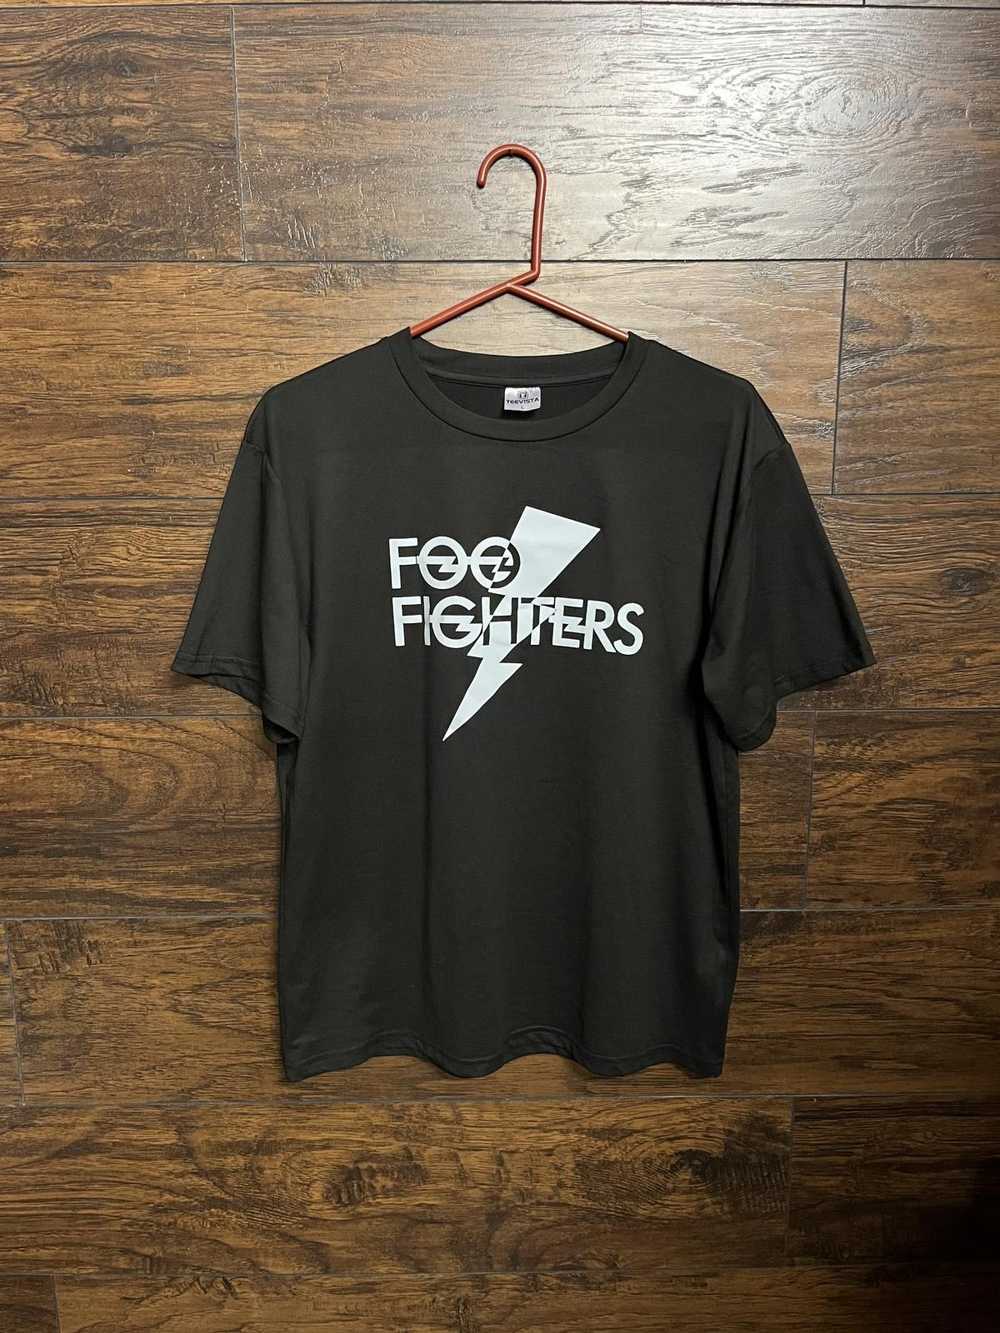 Designer Foo Fighters Polyester T-shirt - image 1